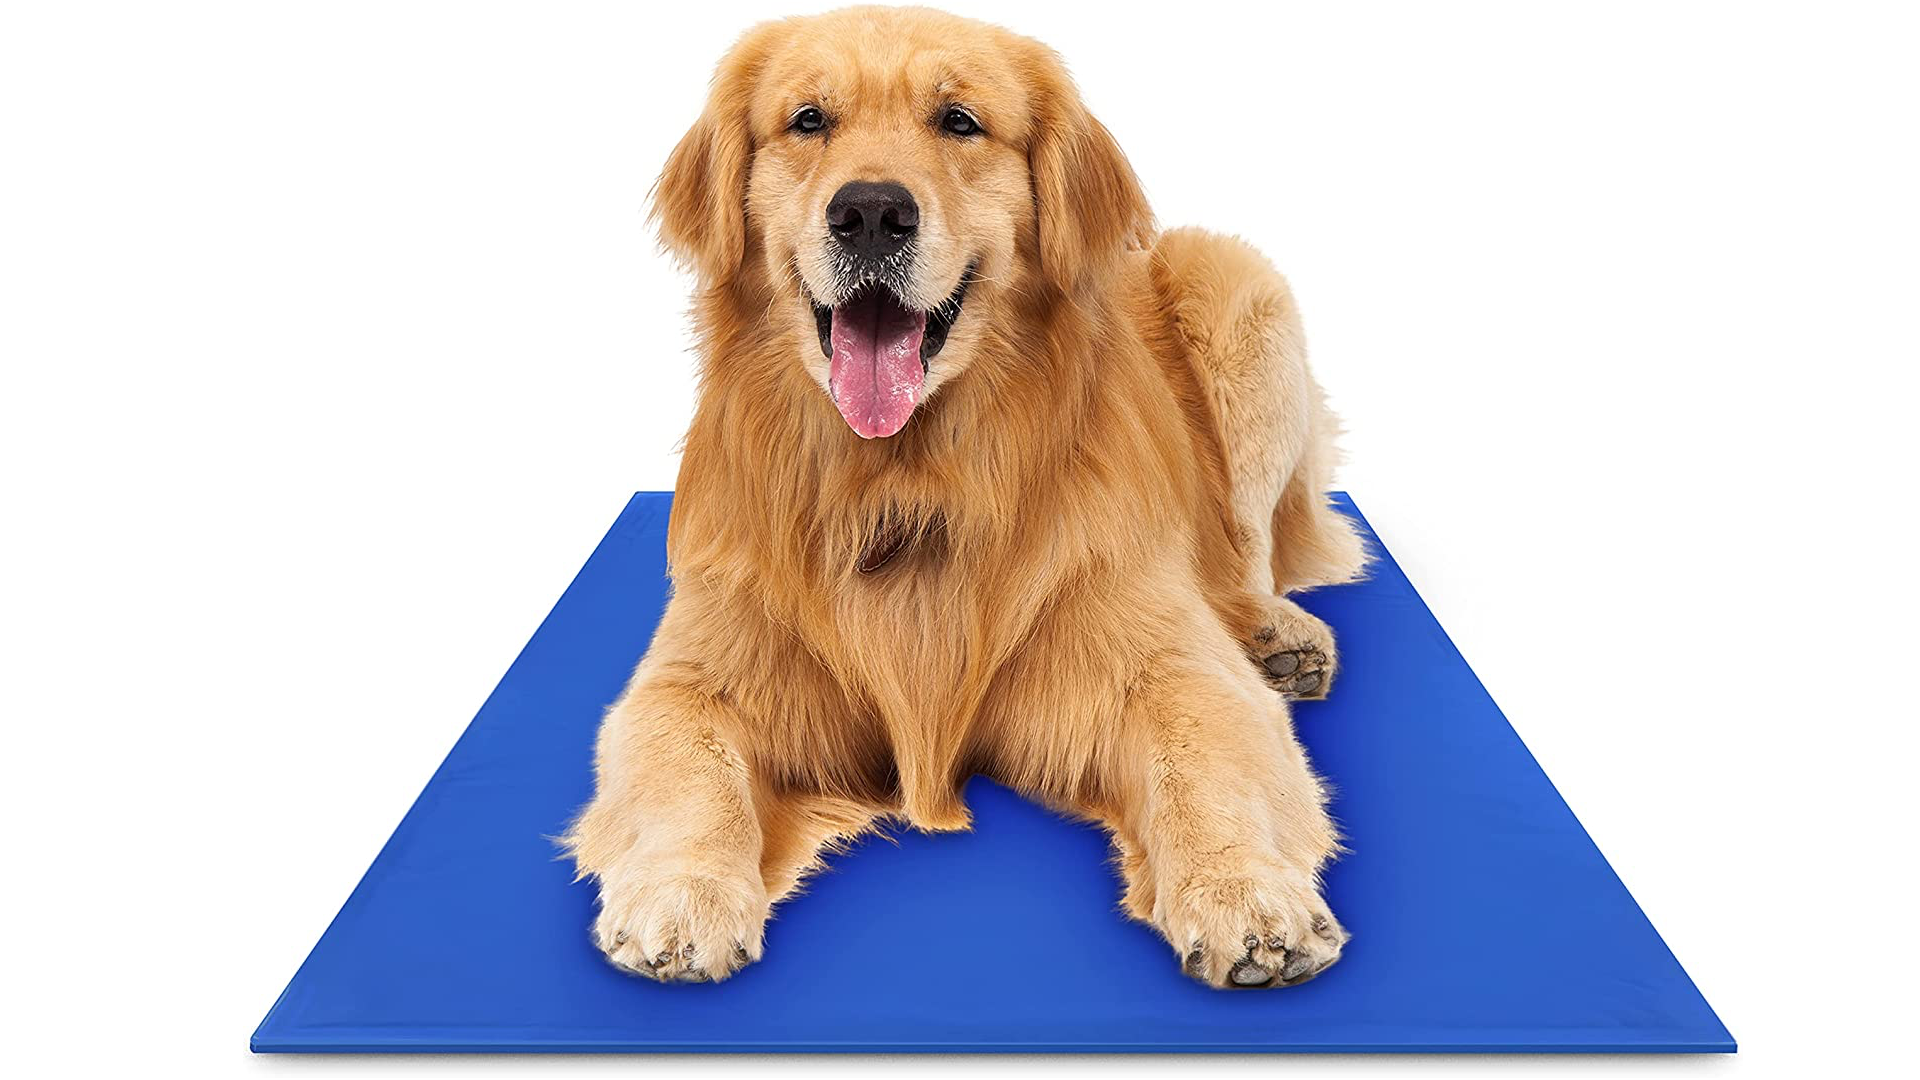 Dog cooling mat 